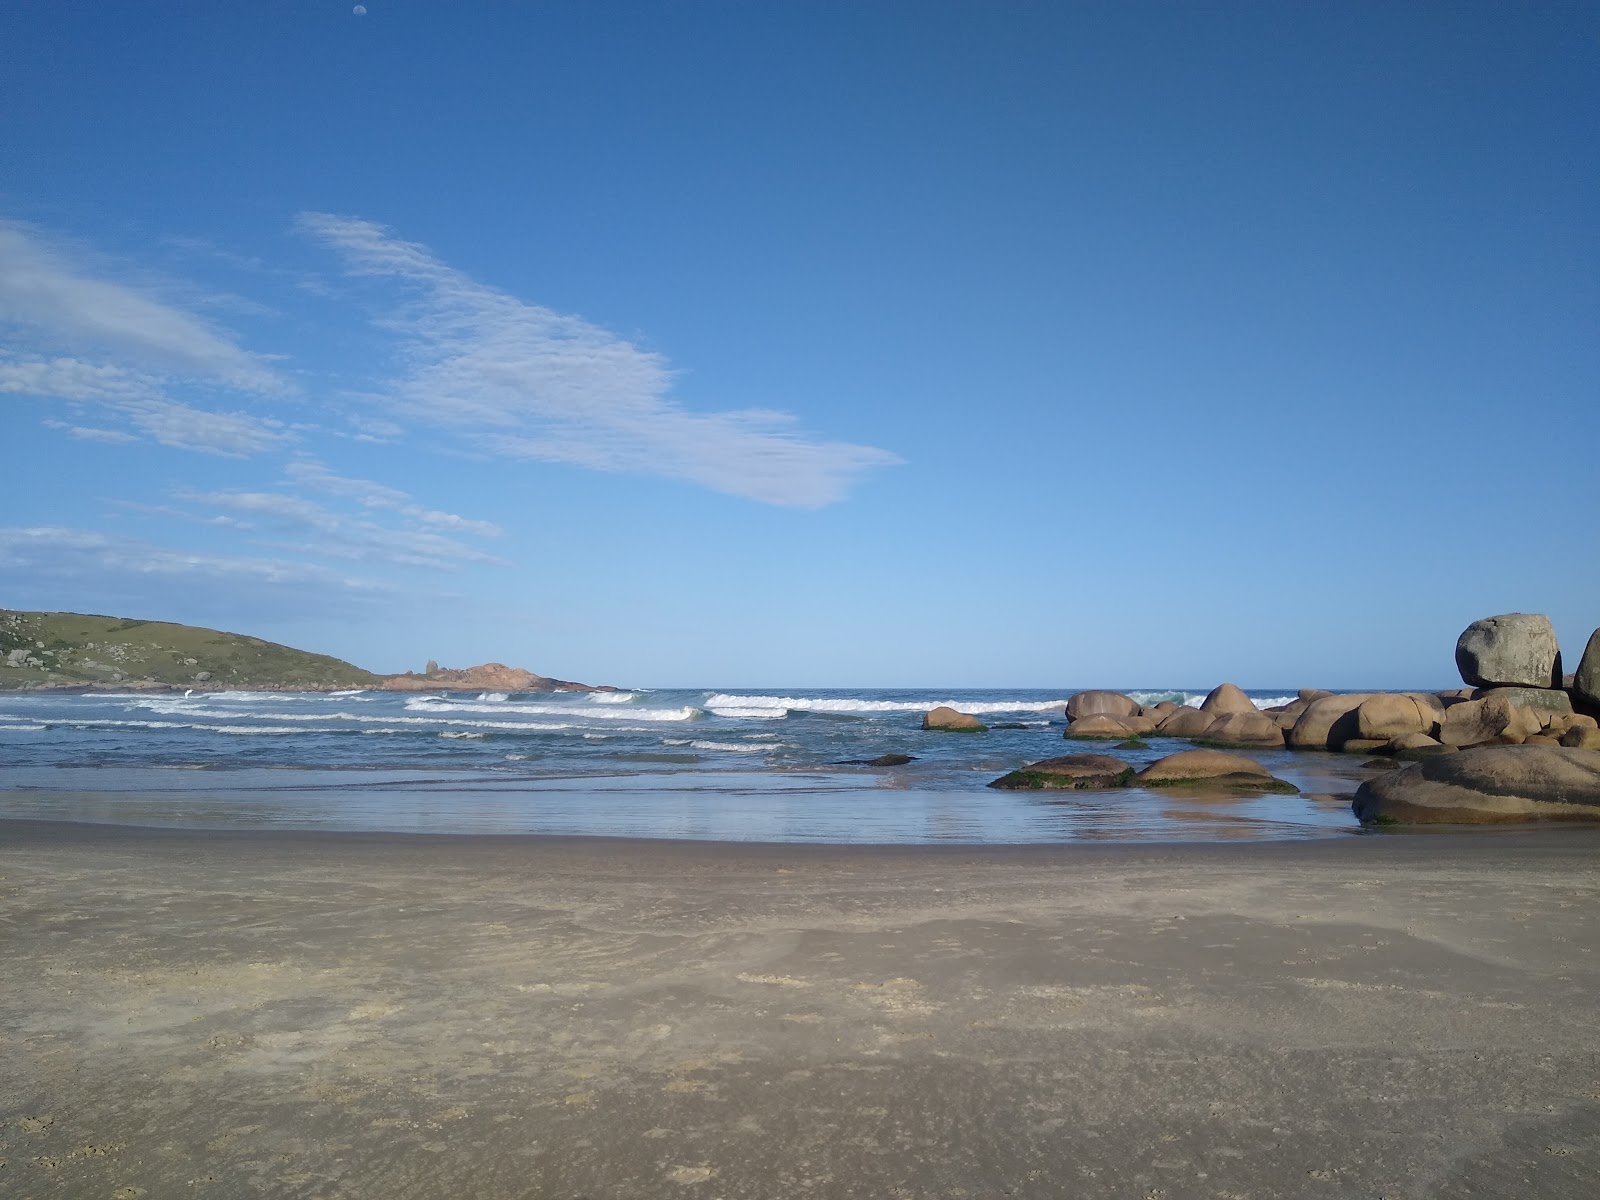 Photo de Praia da Gravata situé dans une zone naturelle